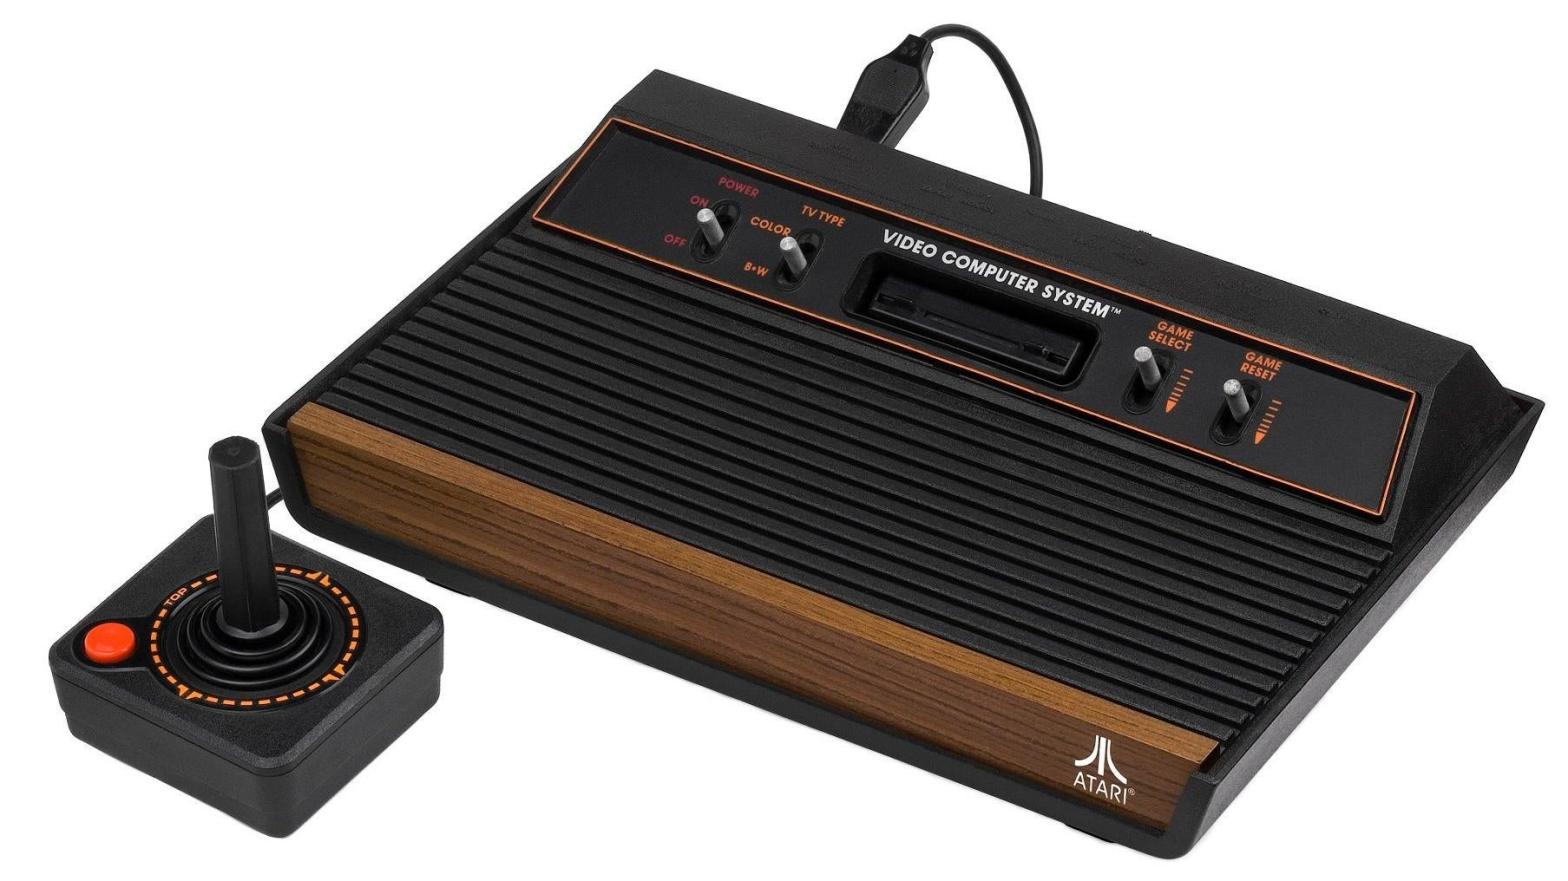 Atari / Evan Amos / Kotaku (Image: Atari / Evan Amos / Kotaku)